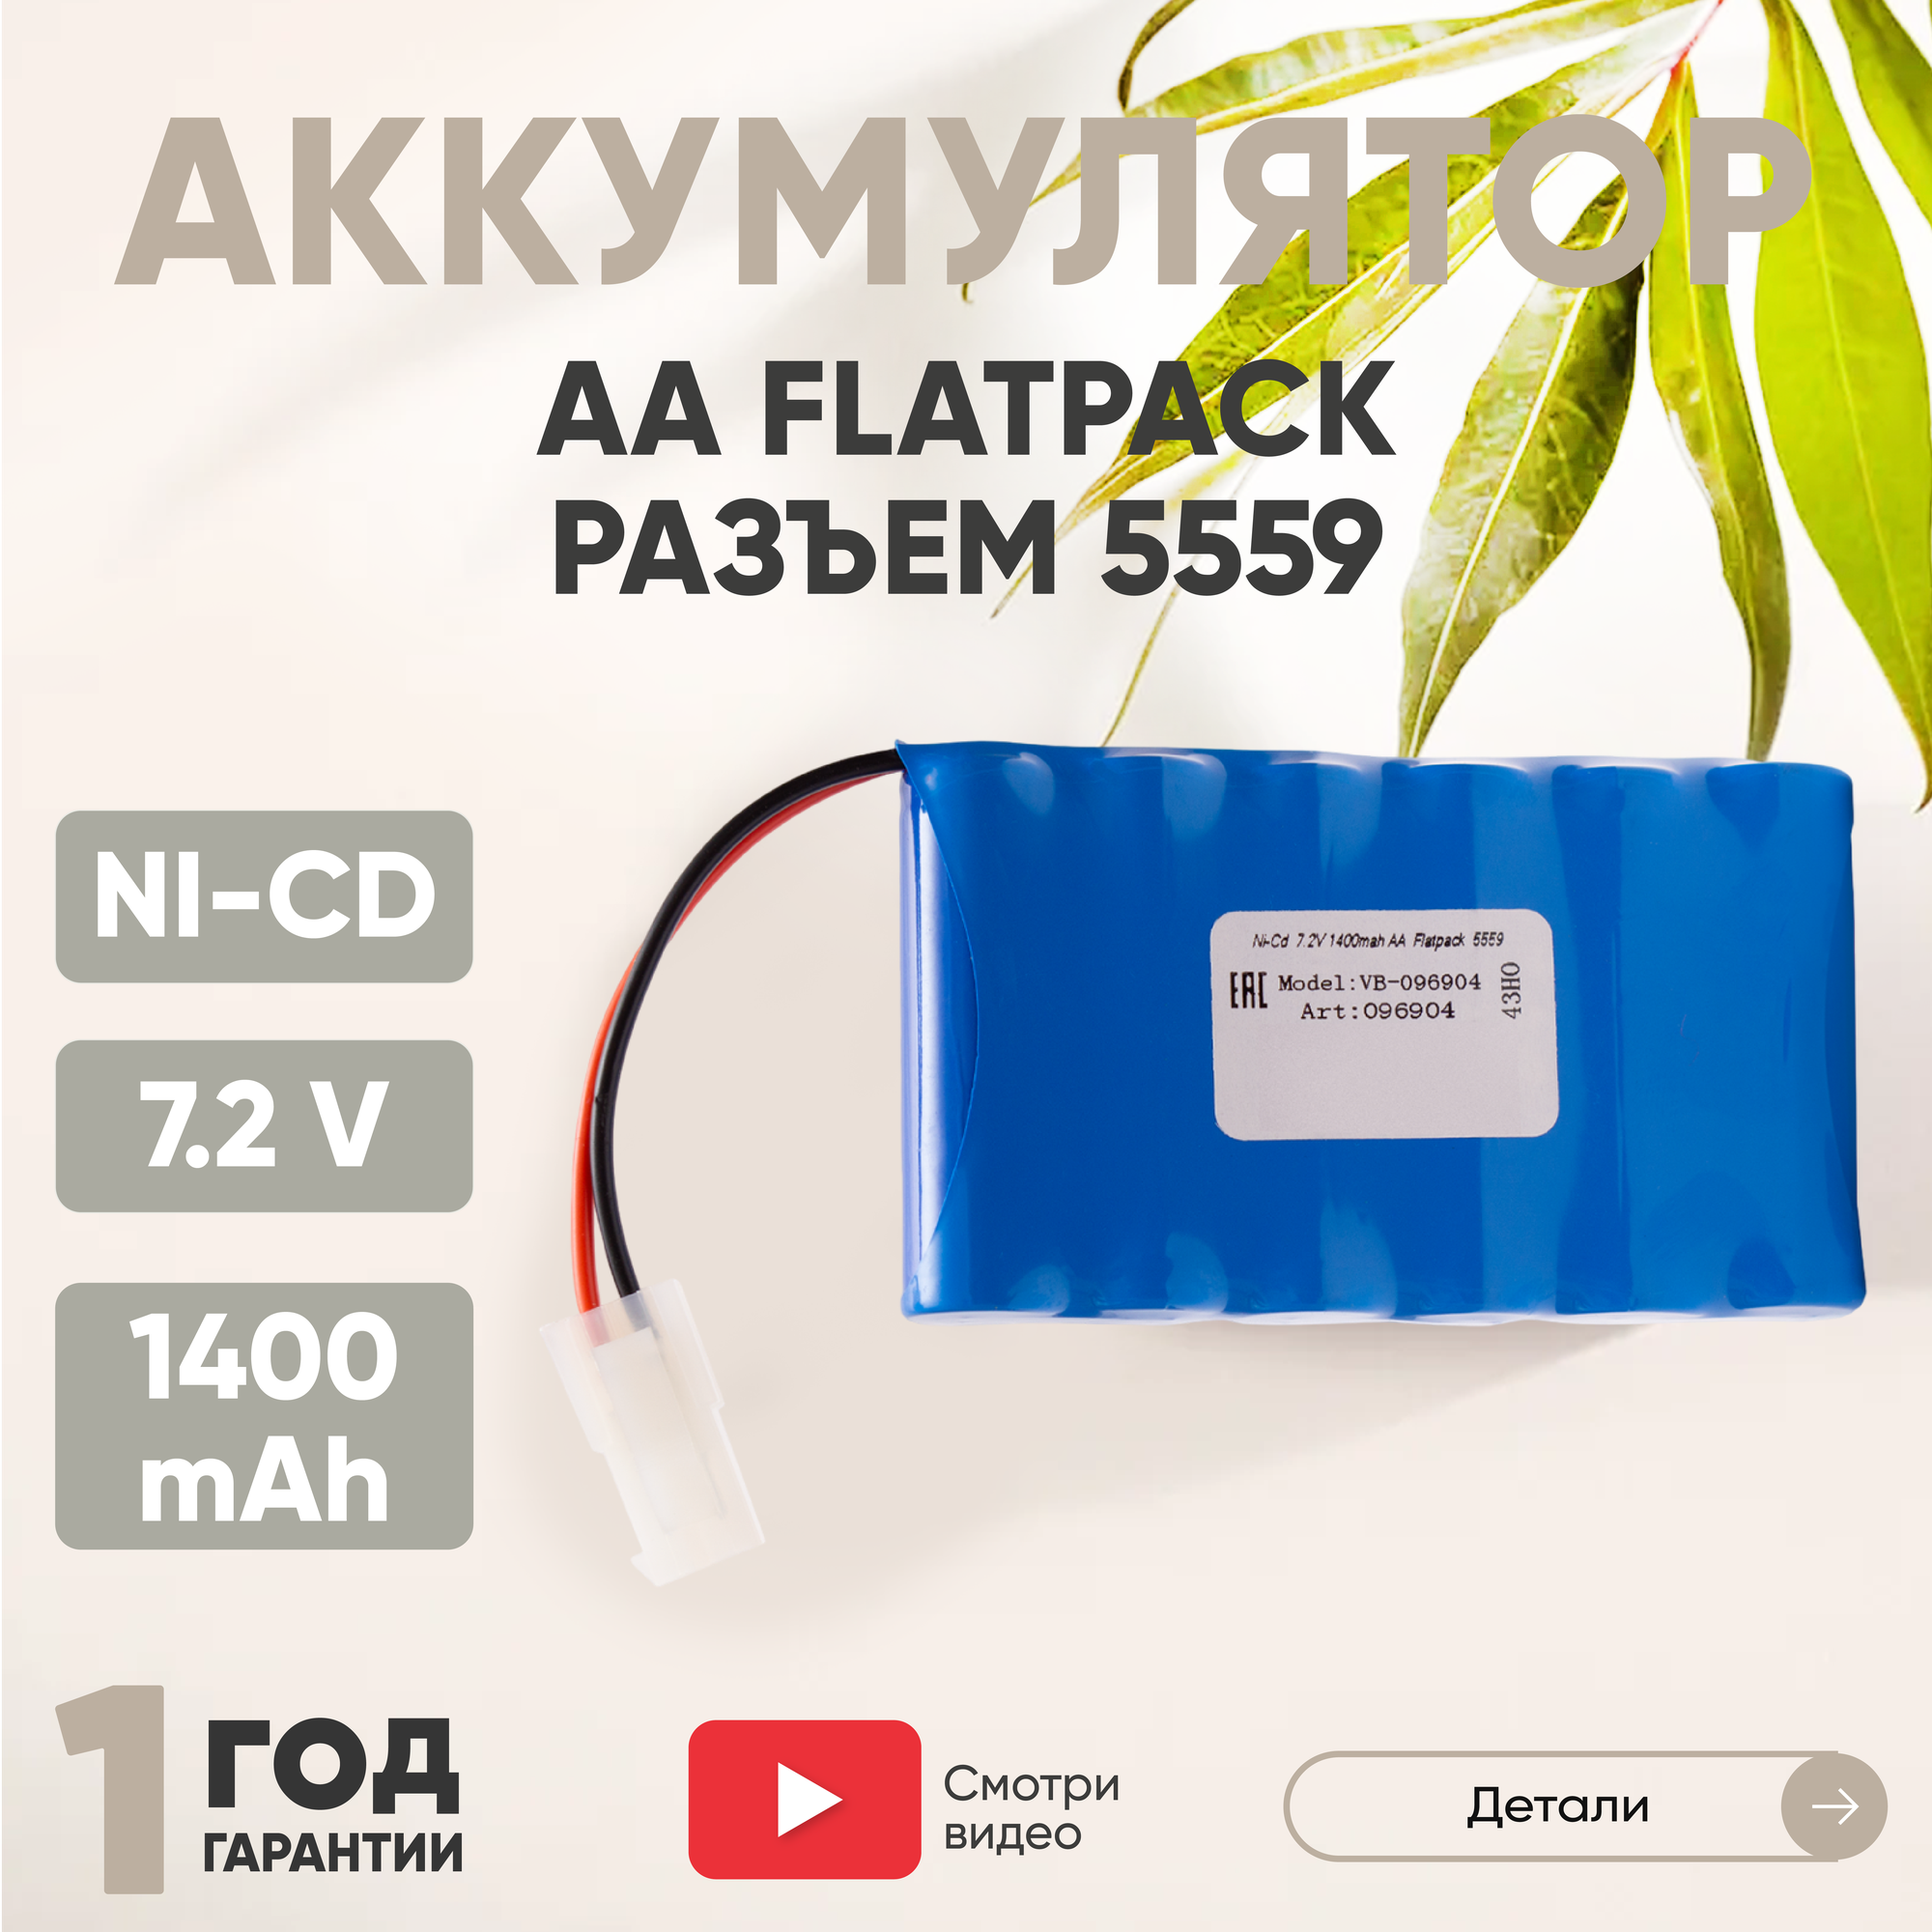 Аккумуляторная батарея (АКБ, аккумулятор) AA Flatpack разъем 5559, 1400мАч, 7.2В, Ni-Cd